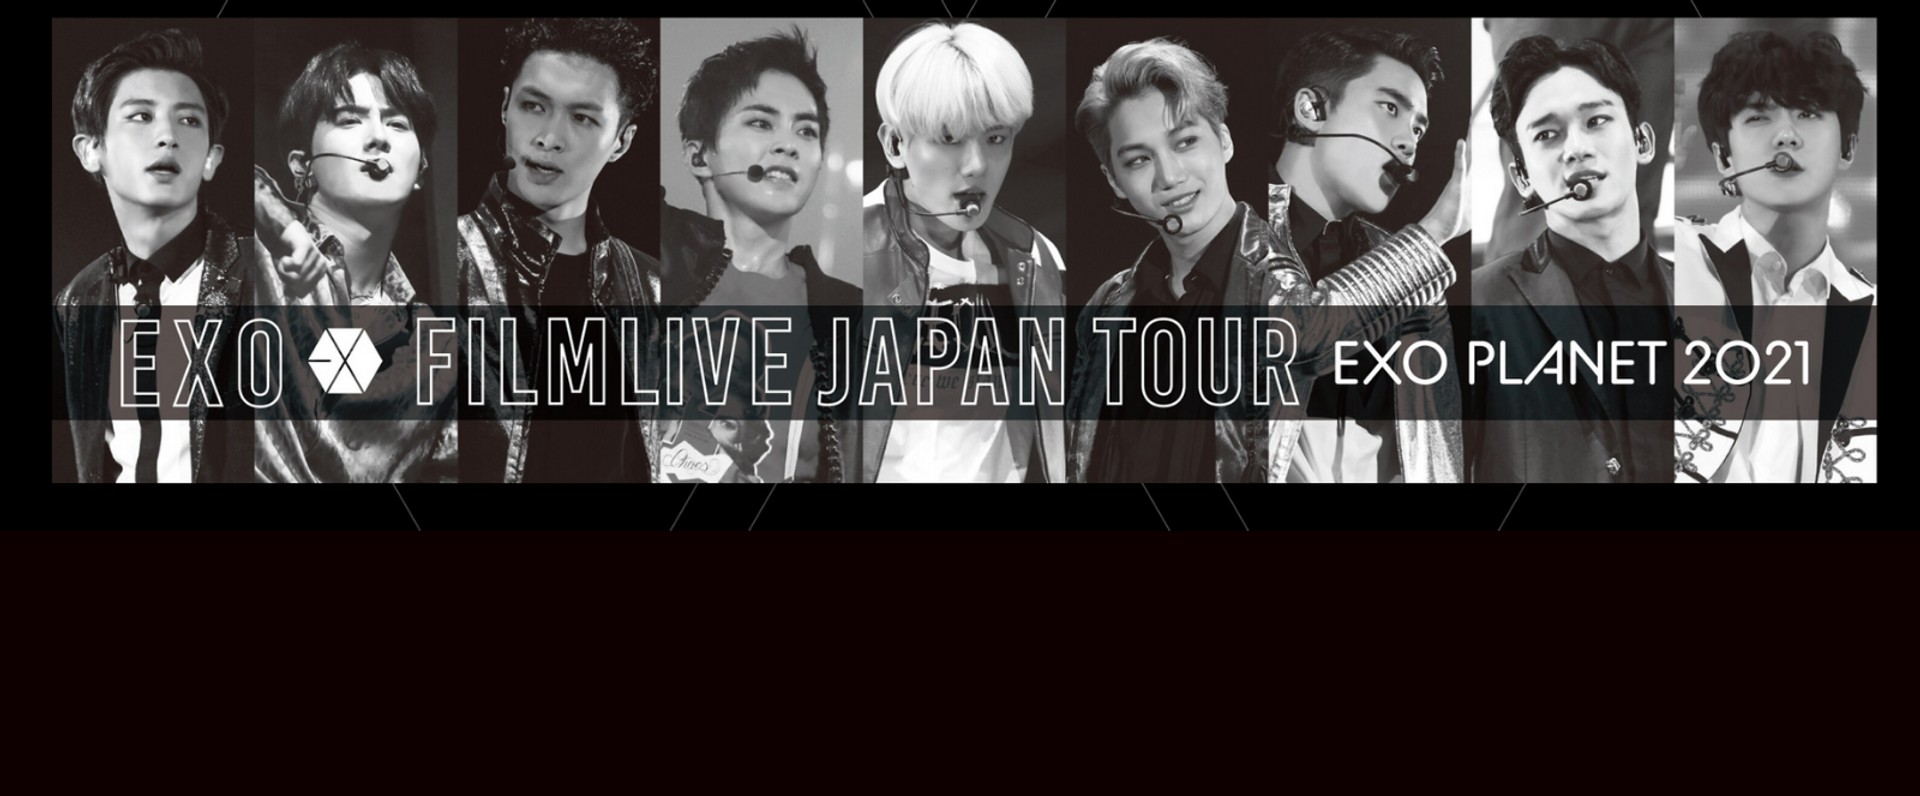 EXO announce FILMLIVE Japan Tour 2021